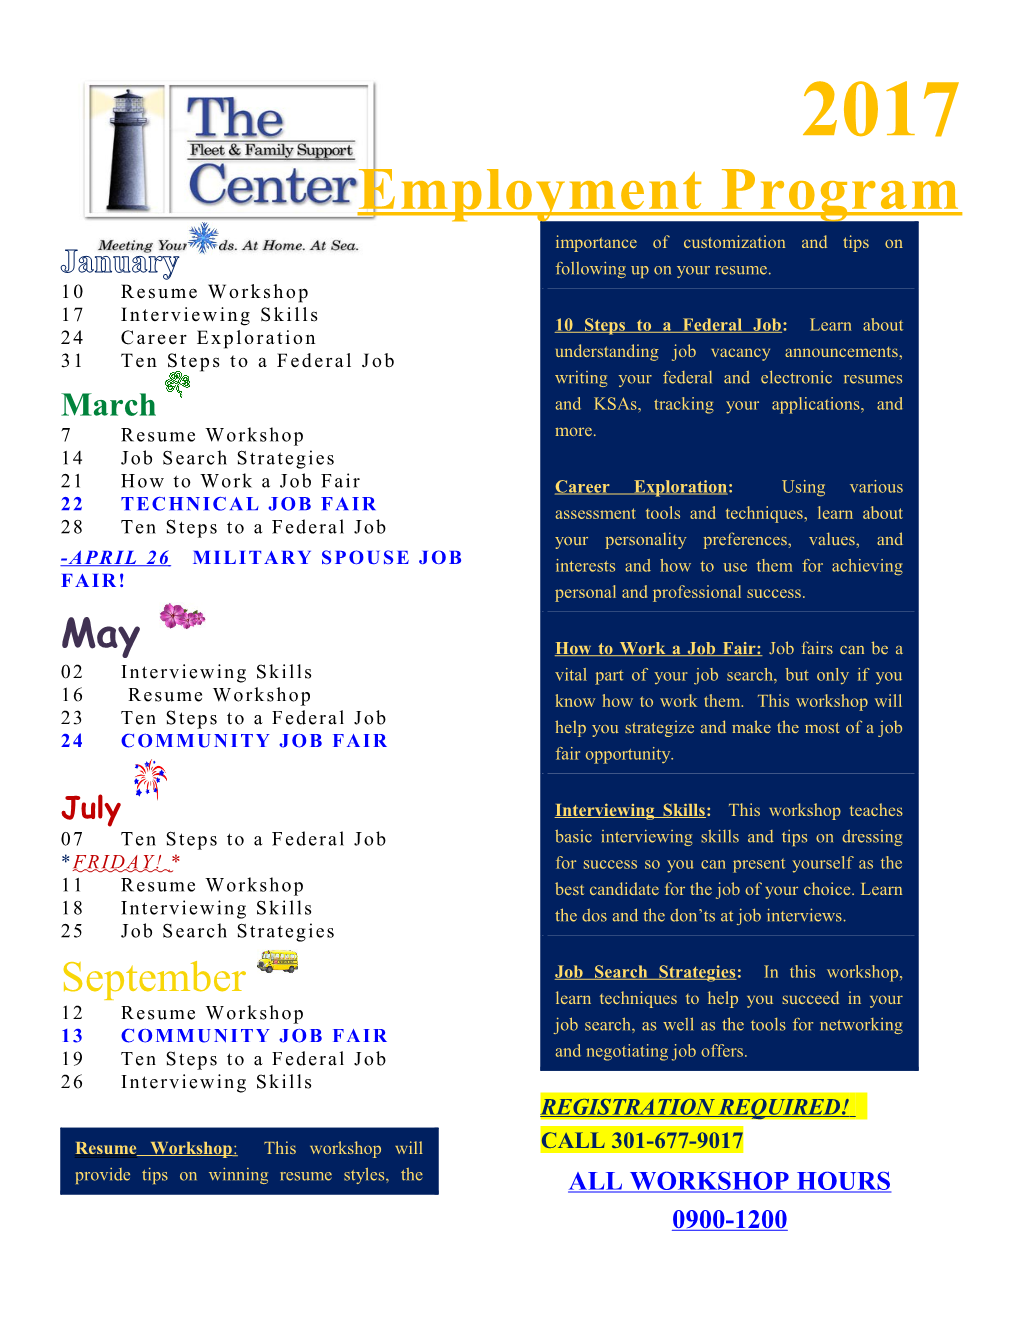 Employment Program